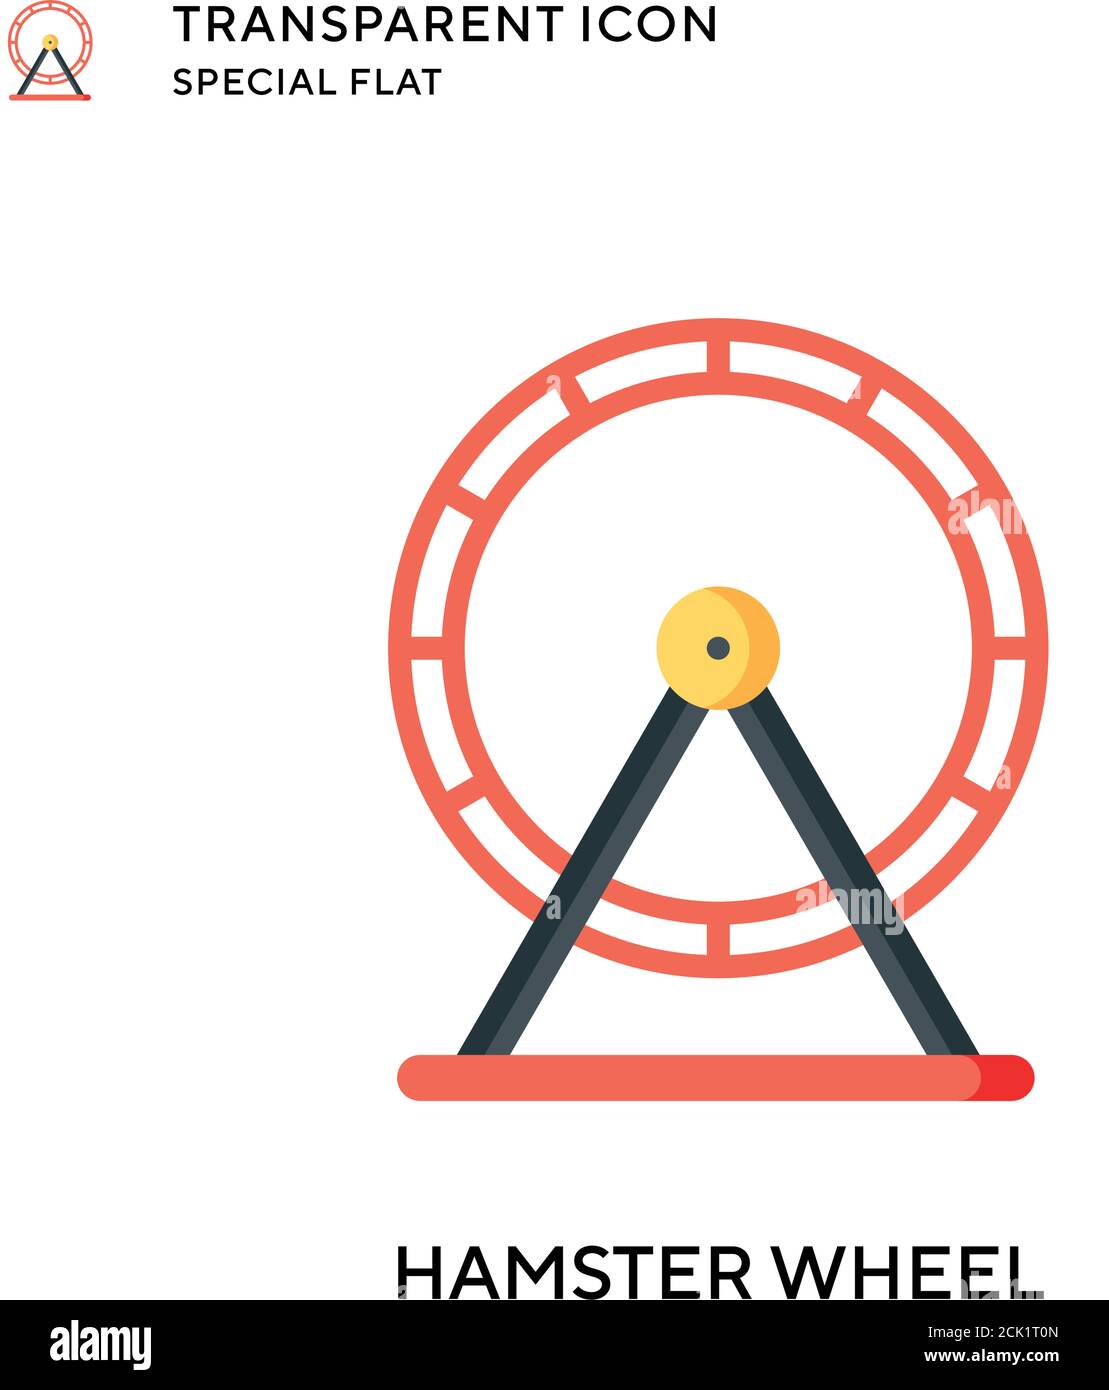 Hamster wheel vector icon. Flat style illustration. EPS 10 vector. Stock Vector